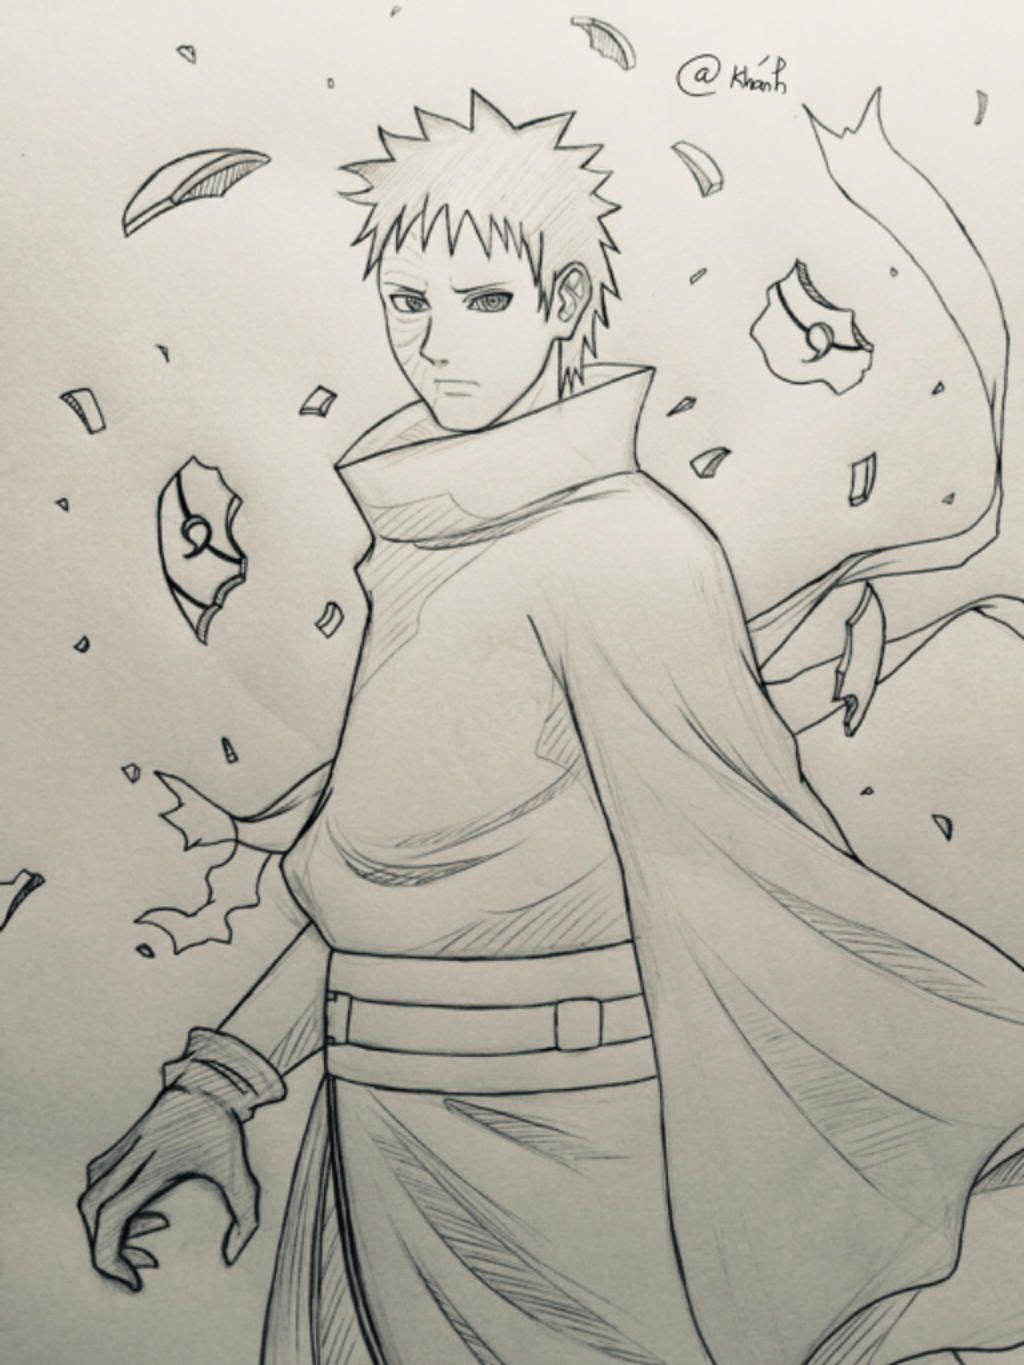 Cách Vẽ Obito Uchiha  Naruto  Vẽ Anime 408  Cong Dan Art  YouTube